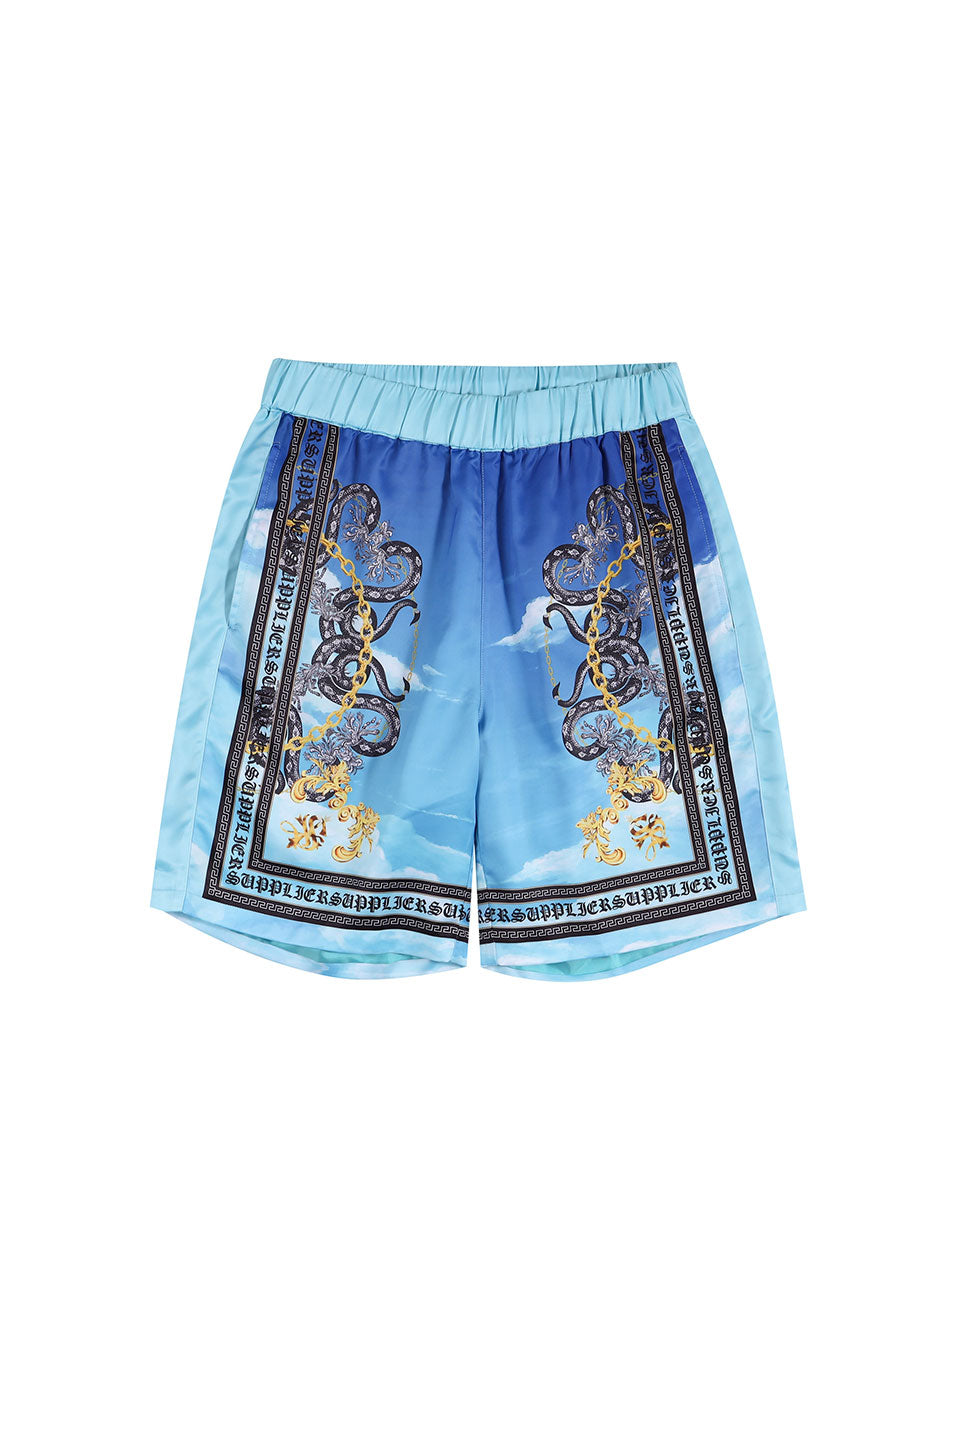 Baroque Cross Shorts